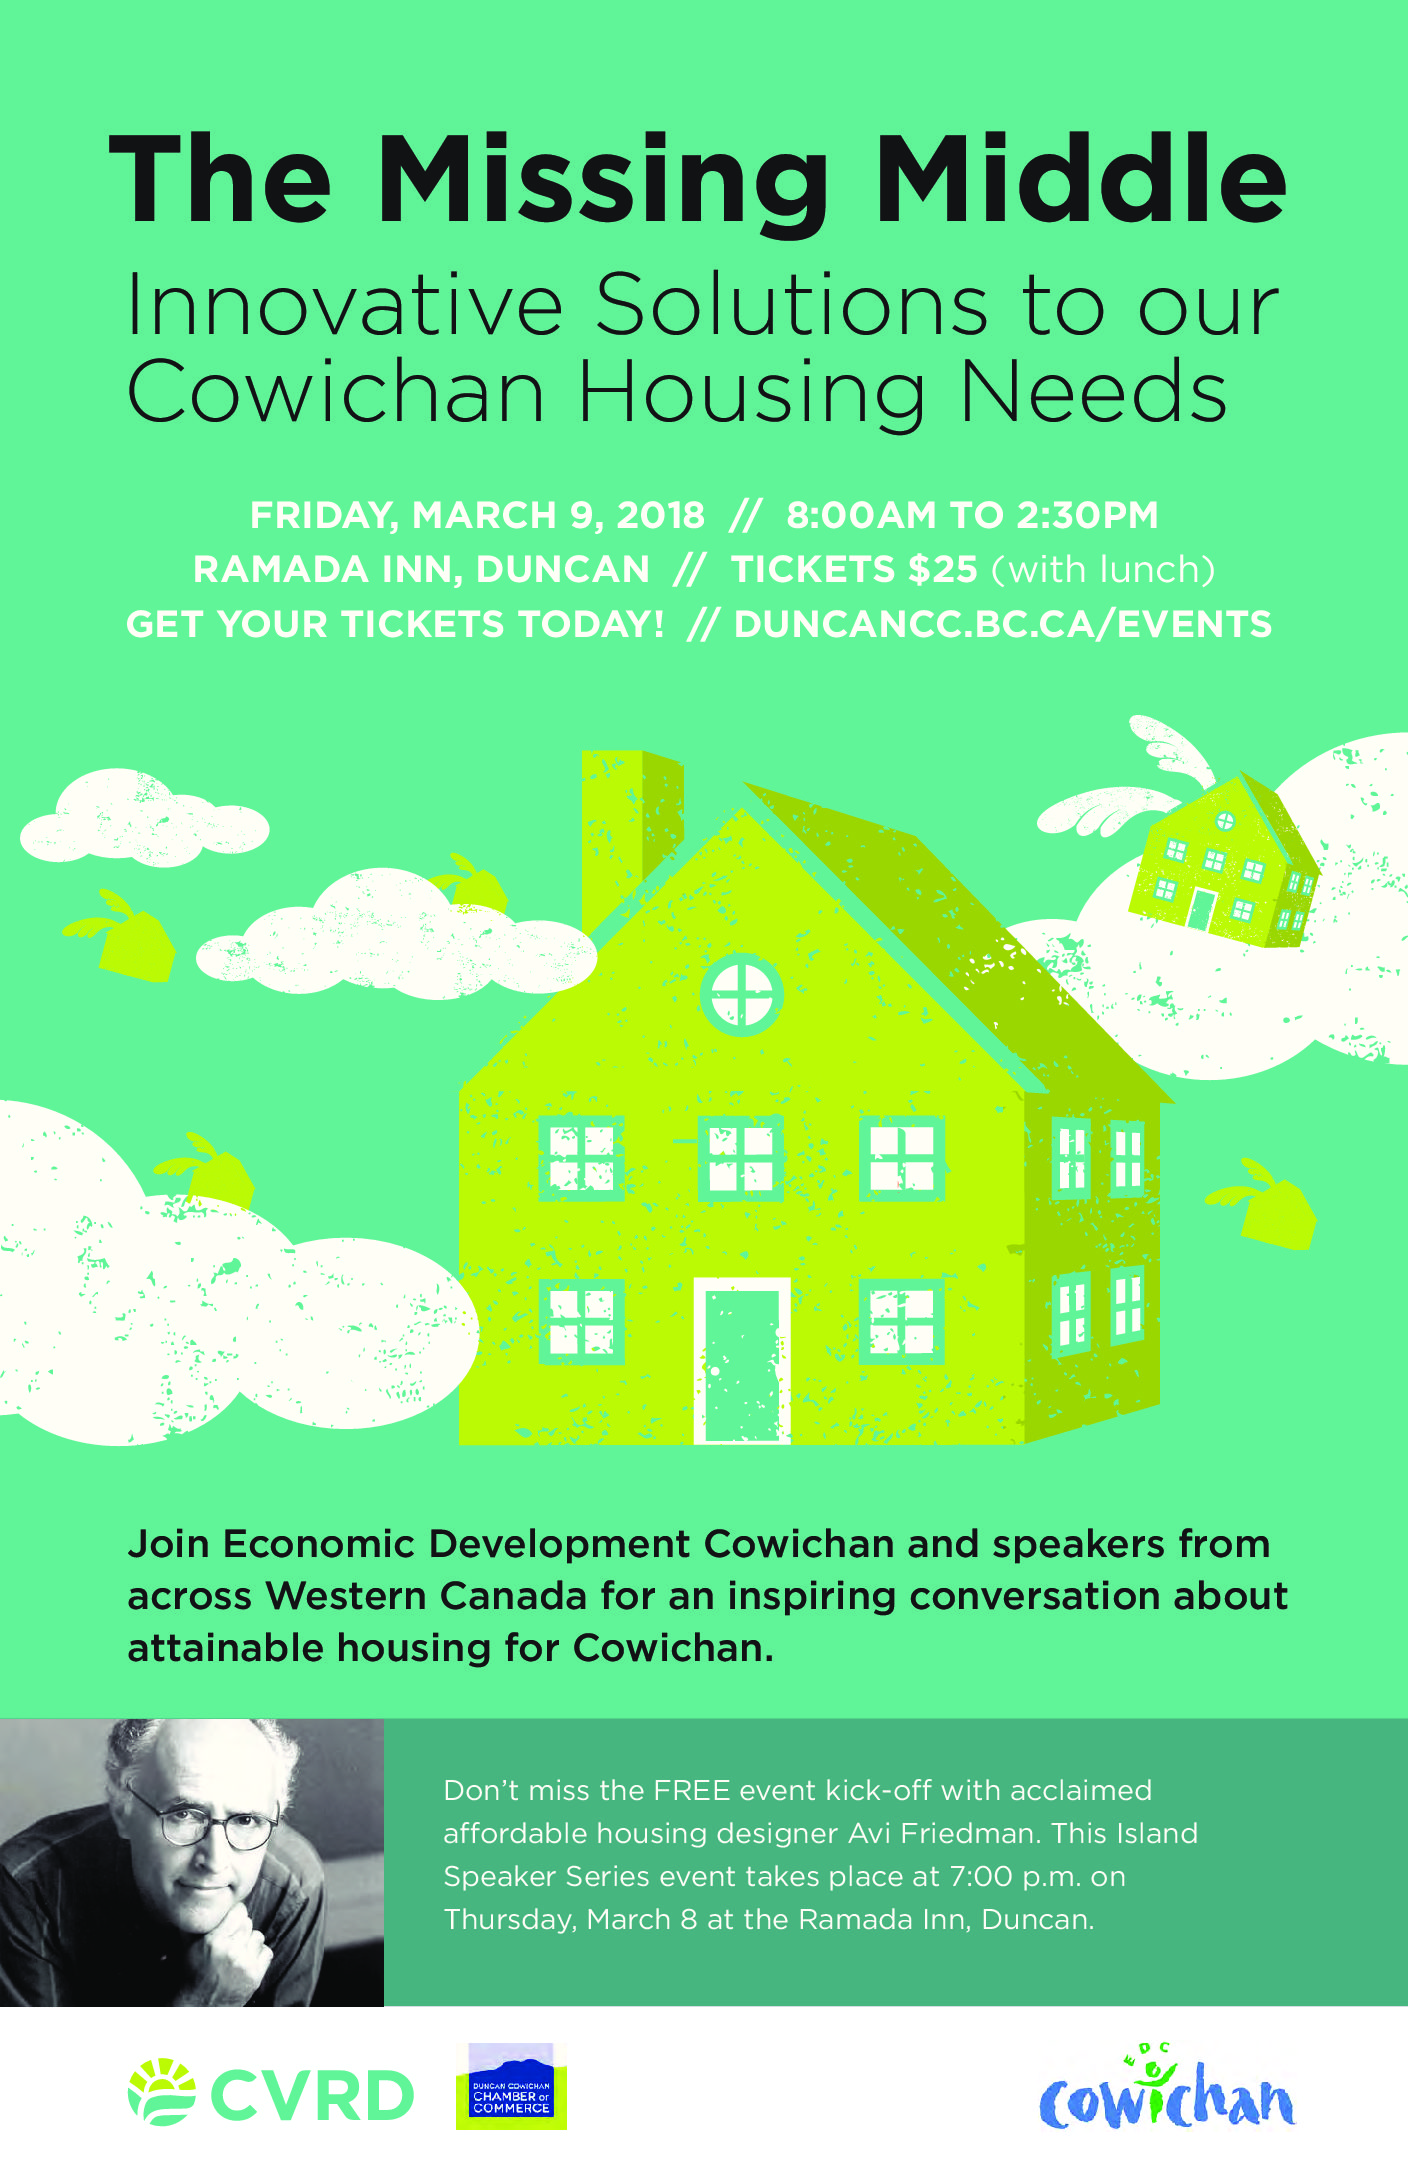 The Future of Housing in Cowichan: Avi Friedman in the Island Speaker Series